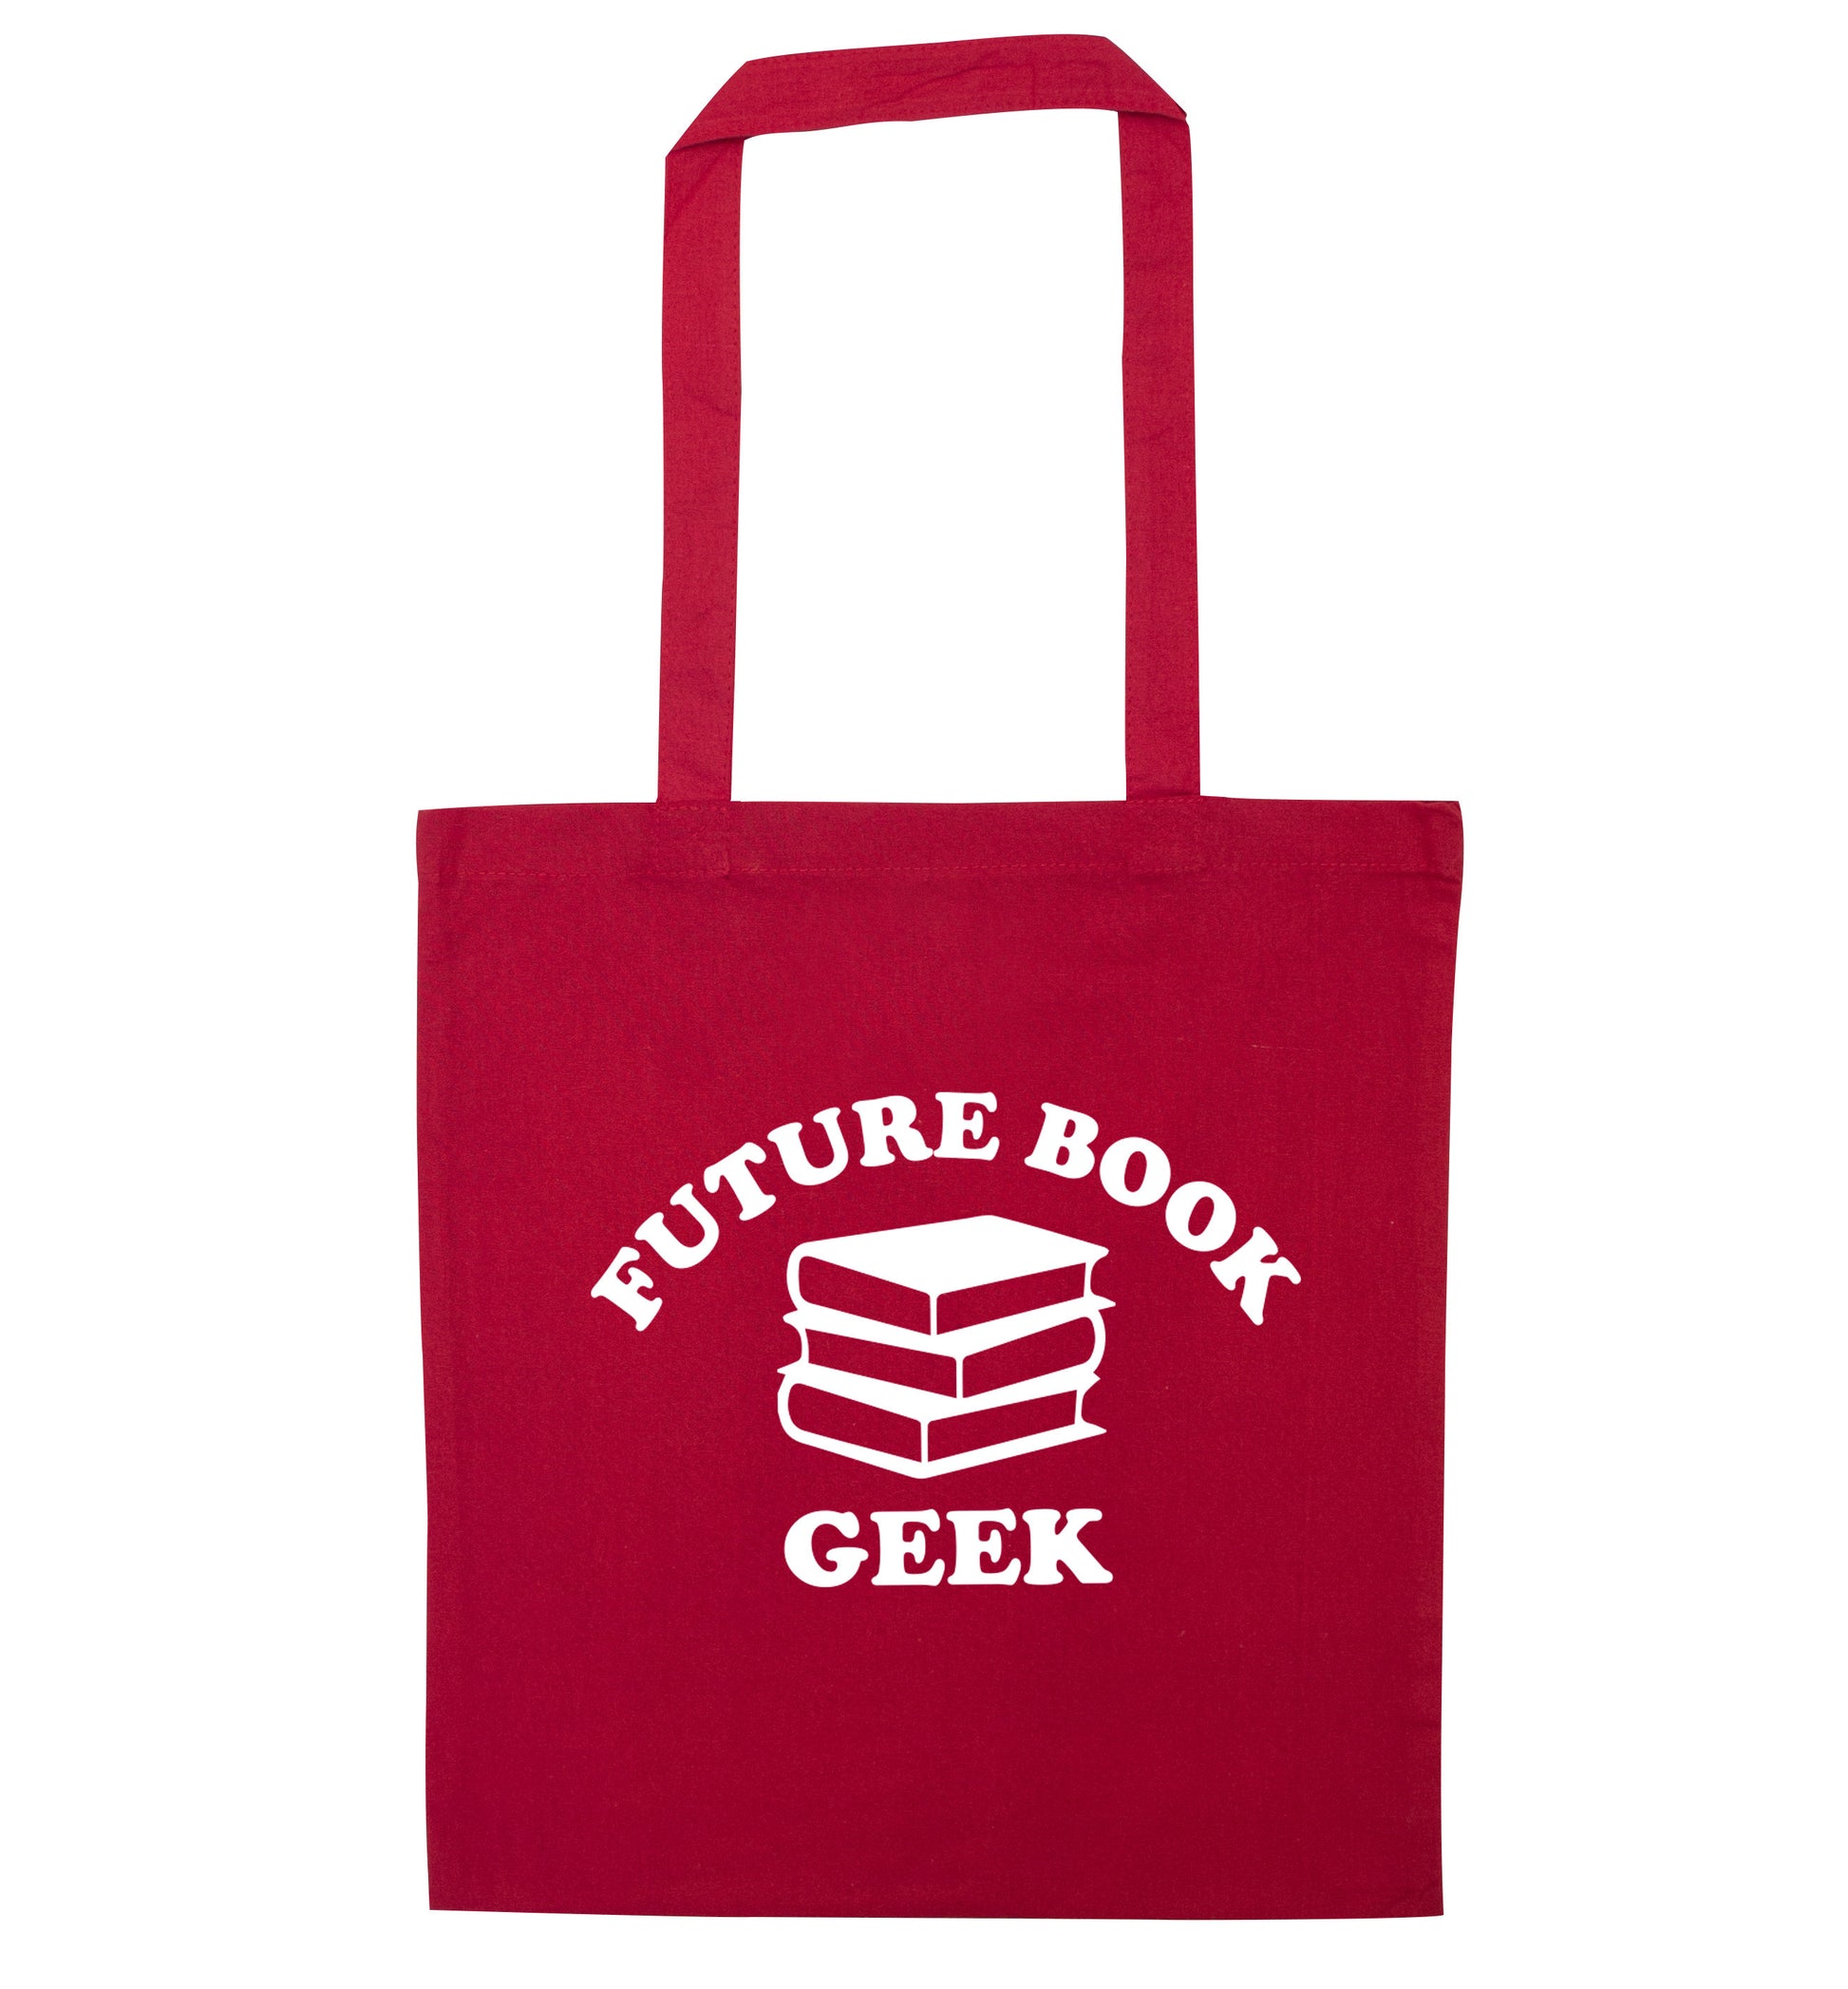 Future book geek red tote bag